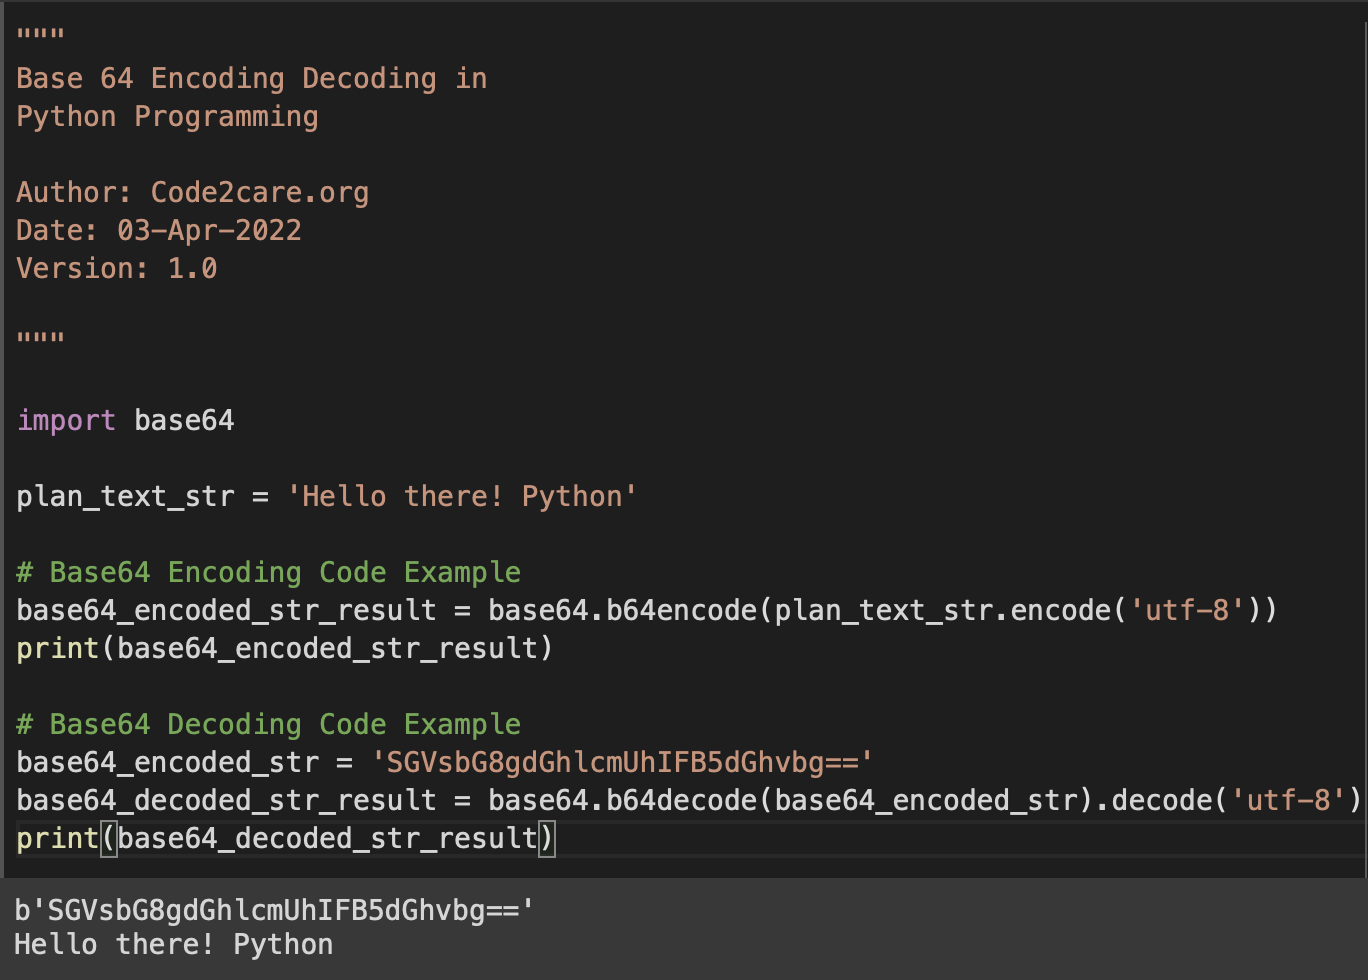 Python Programming Base64 Encoding Decoding Code Example